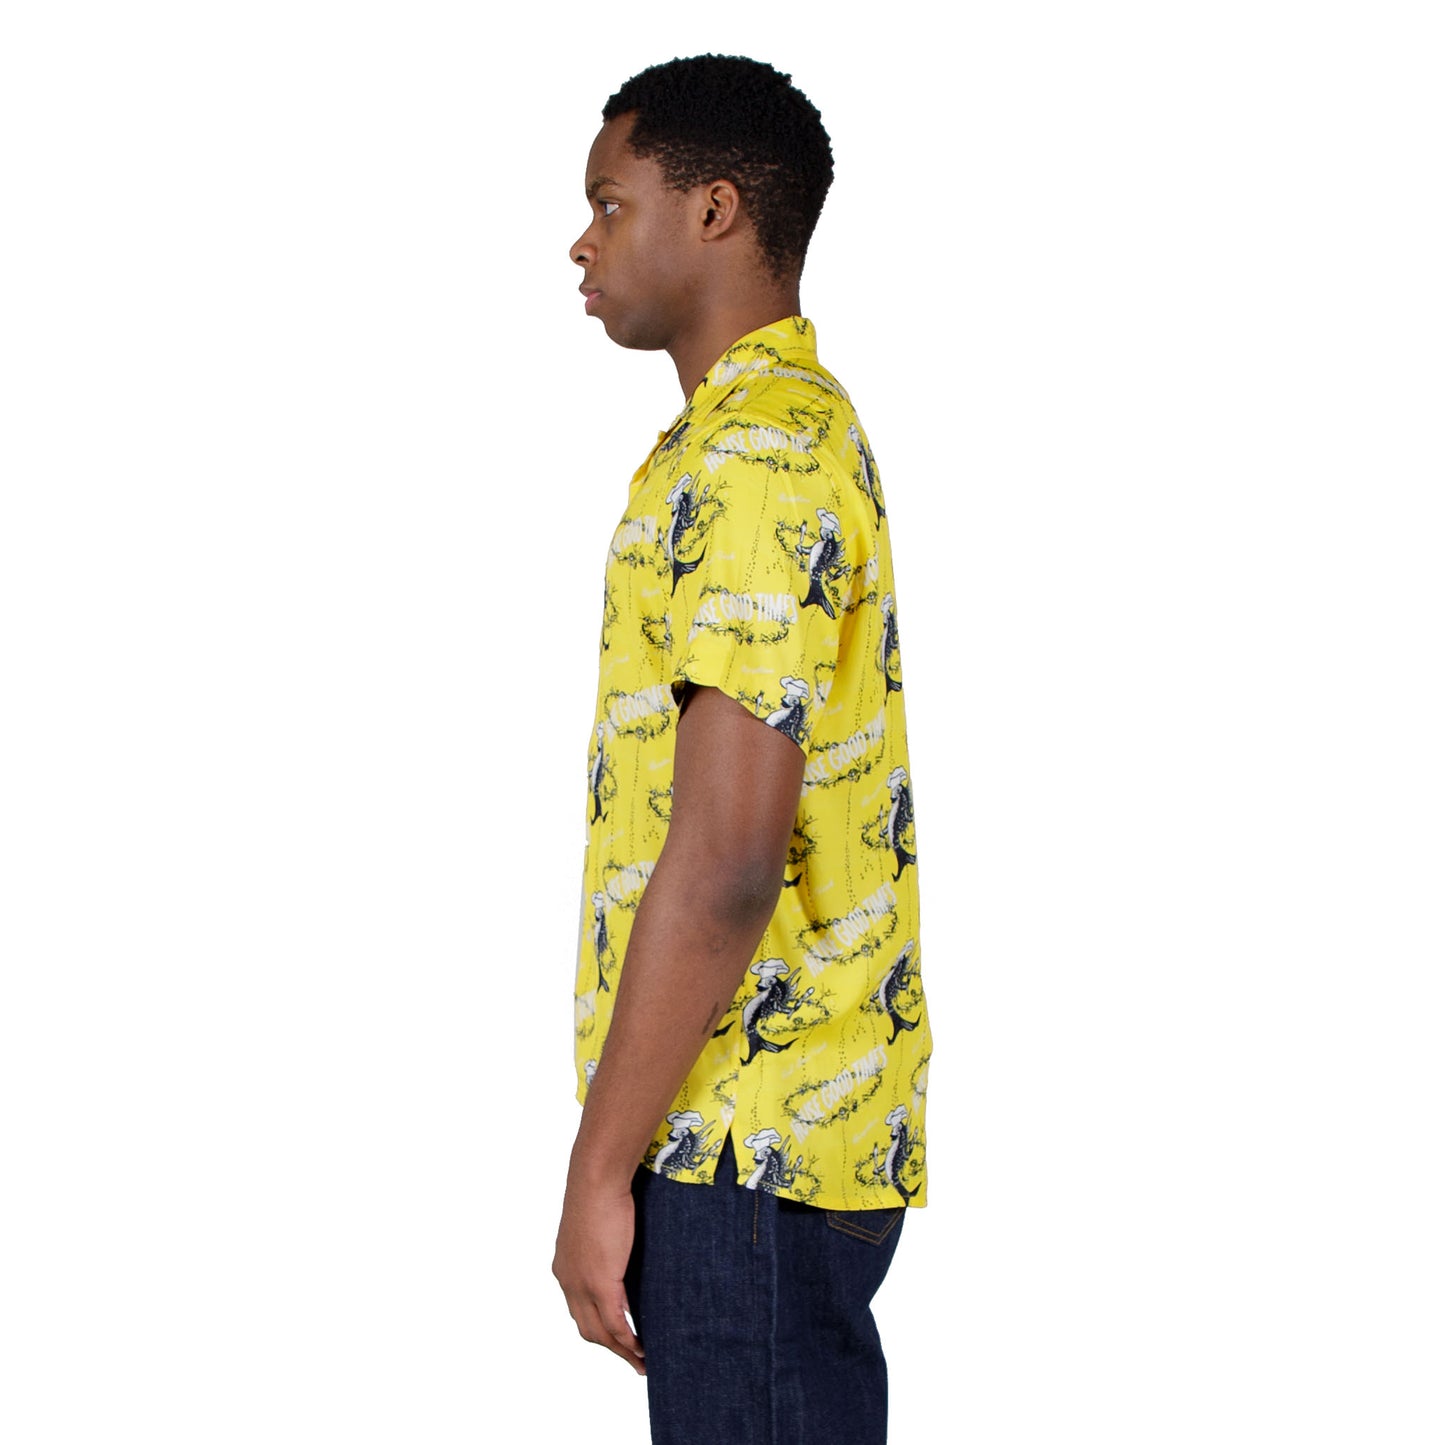 shop Reception shirt online bowling short sleeve yellow print